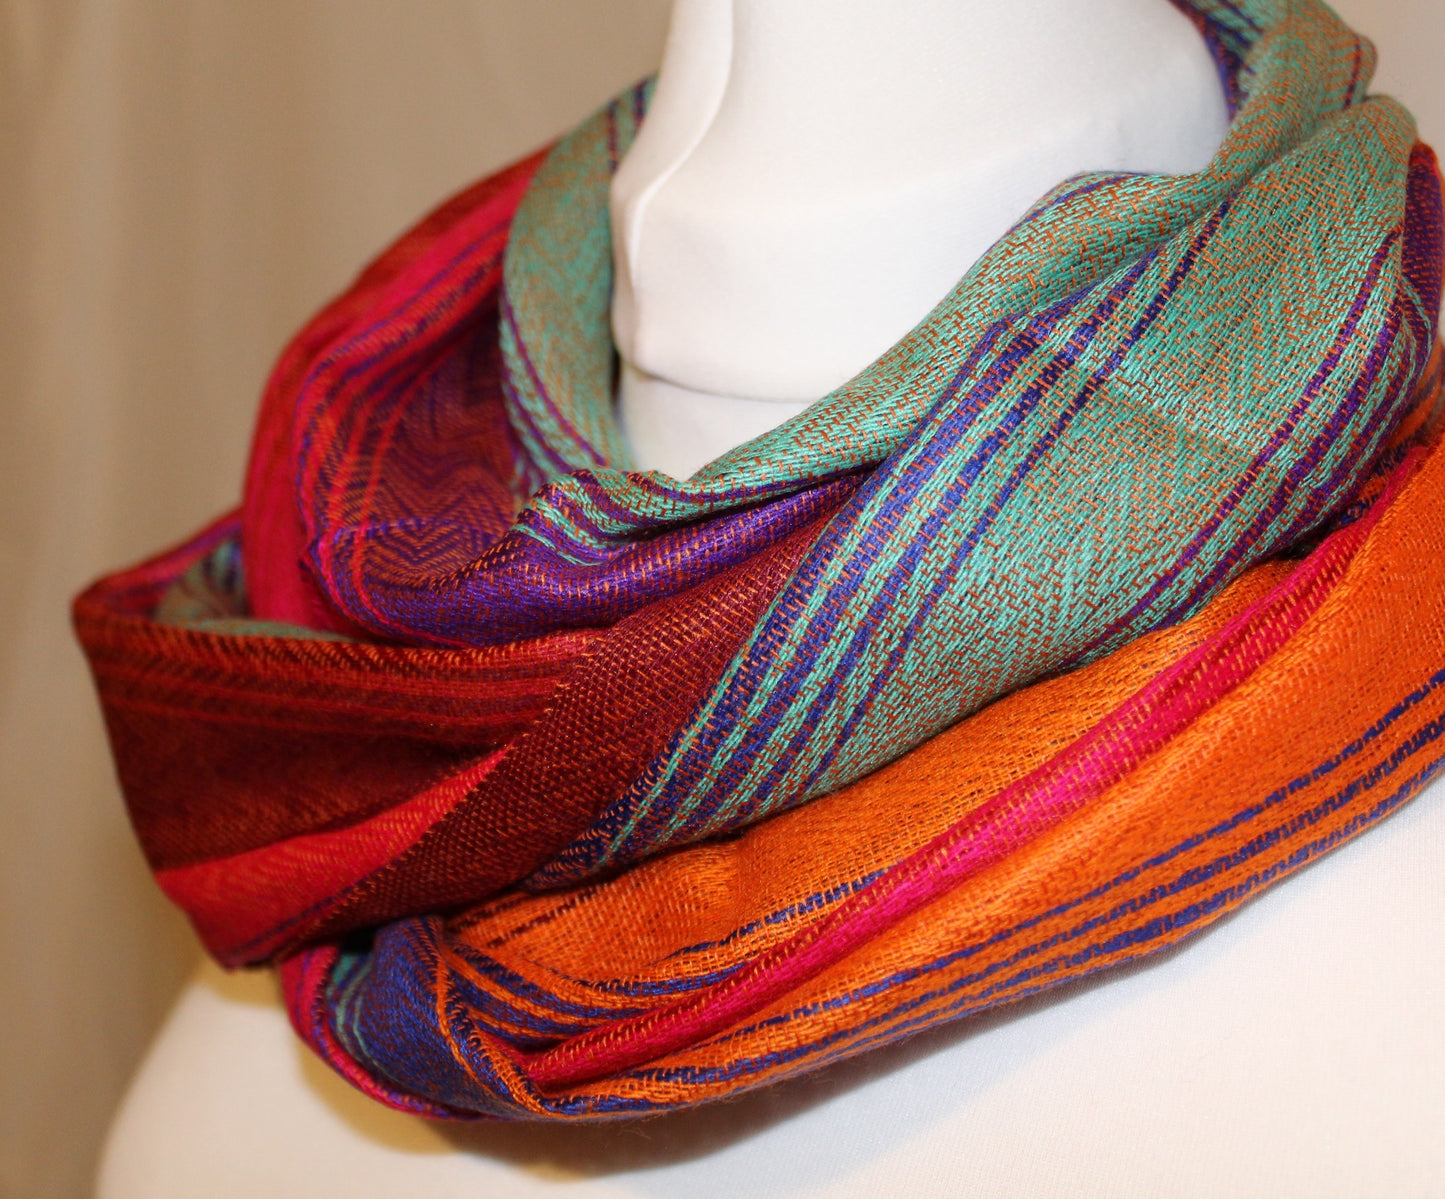 Stunning colourful handwoven scarves, artisan from Ecuador